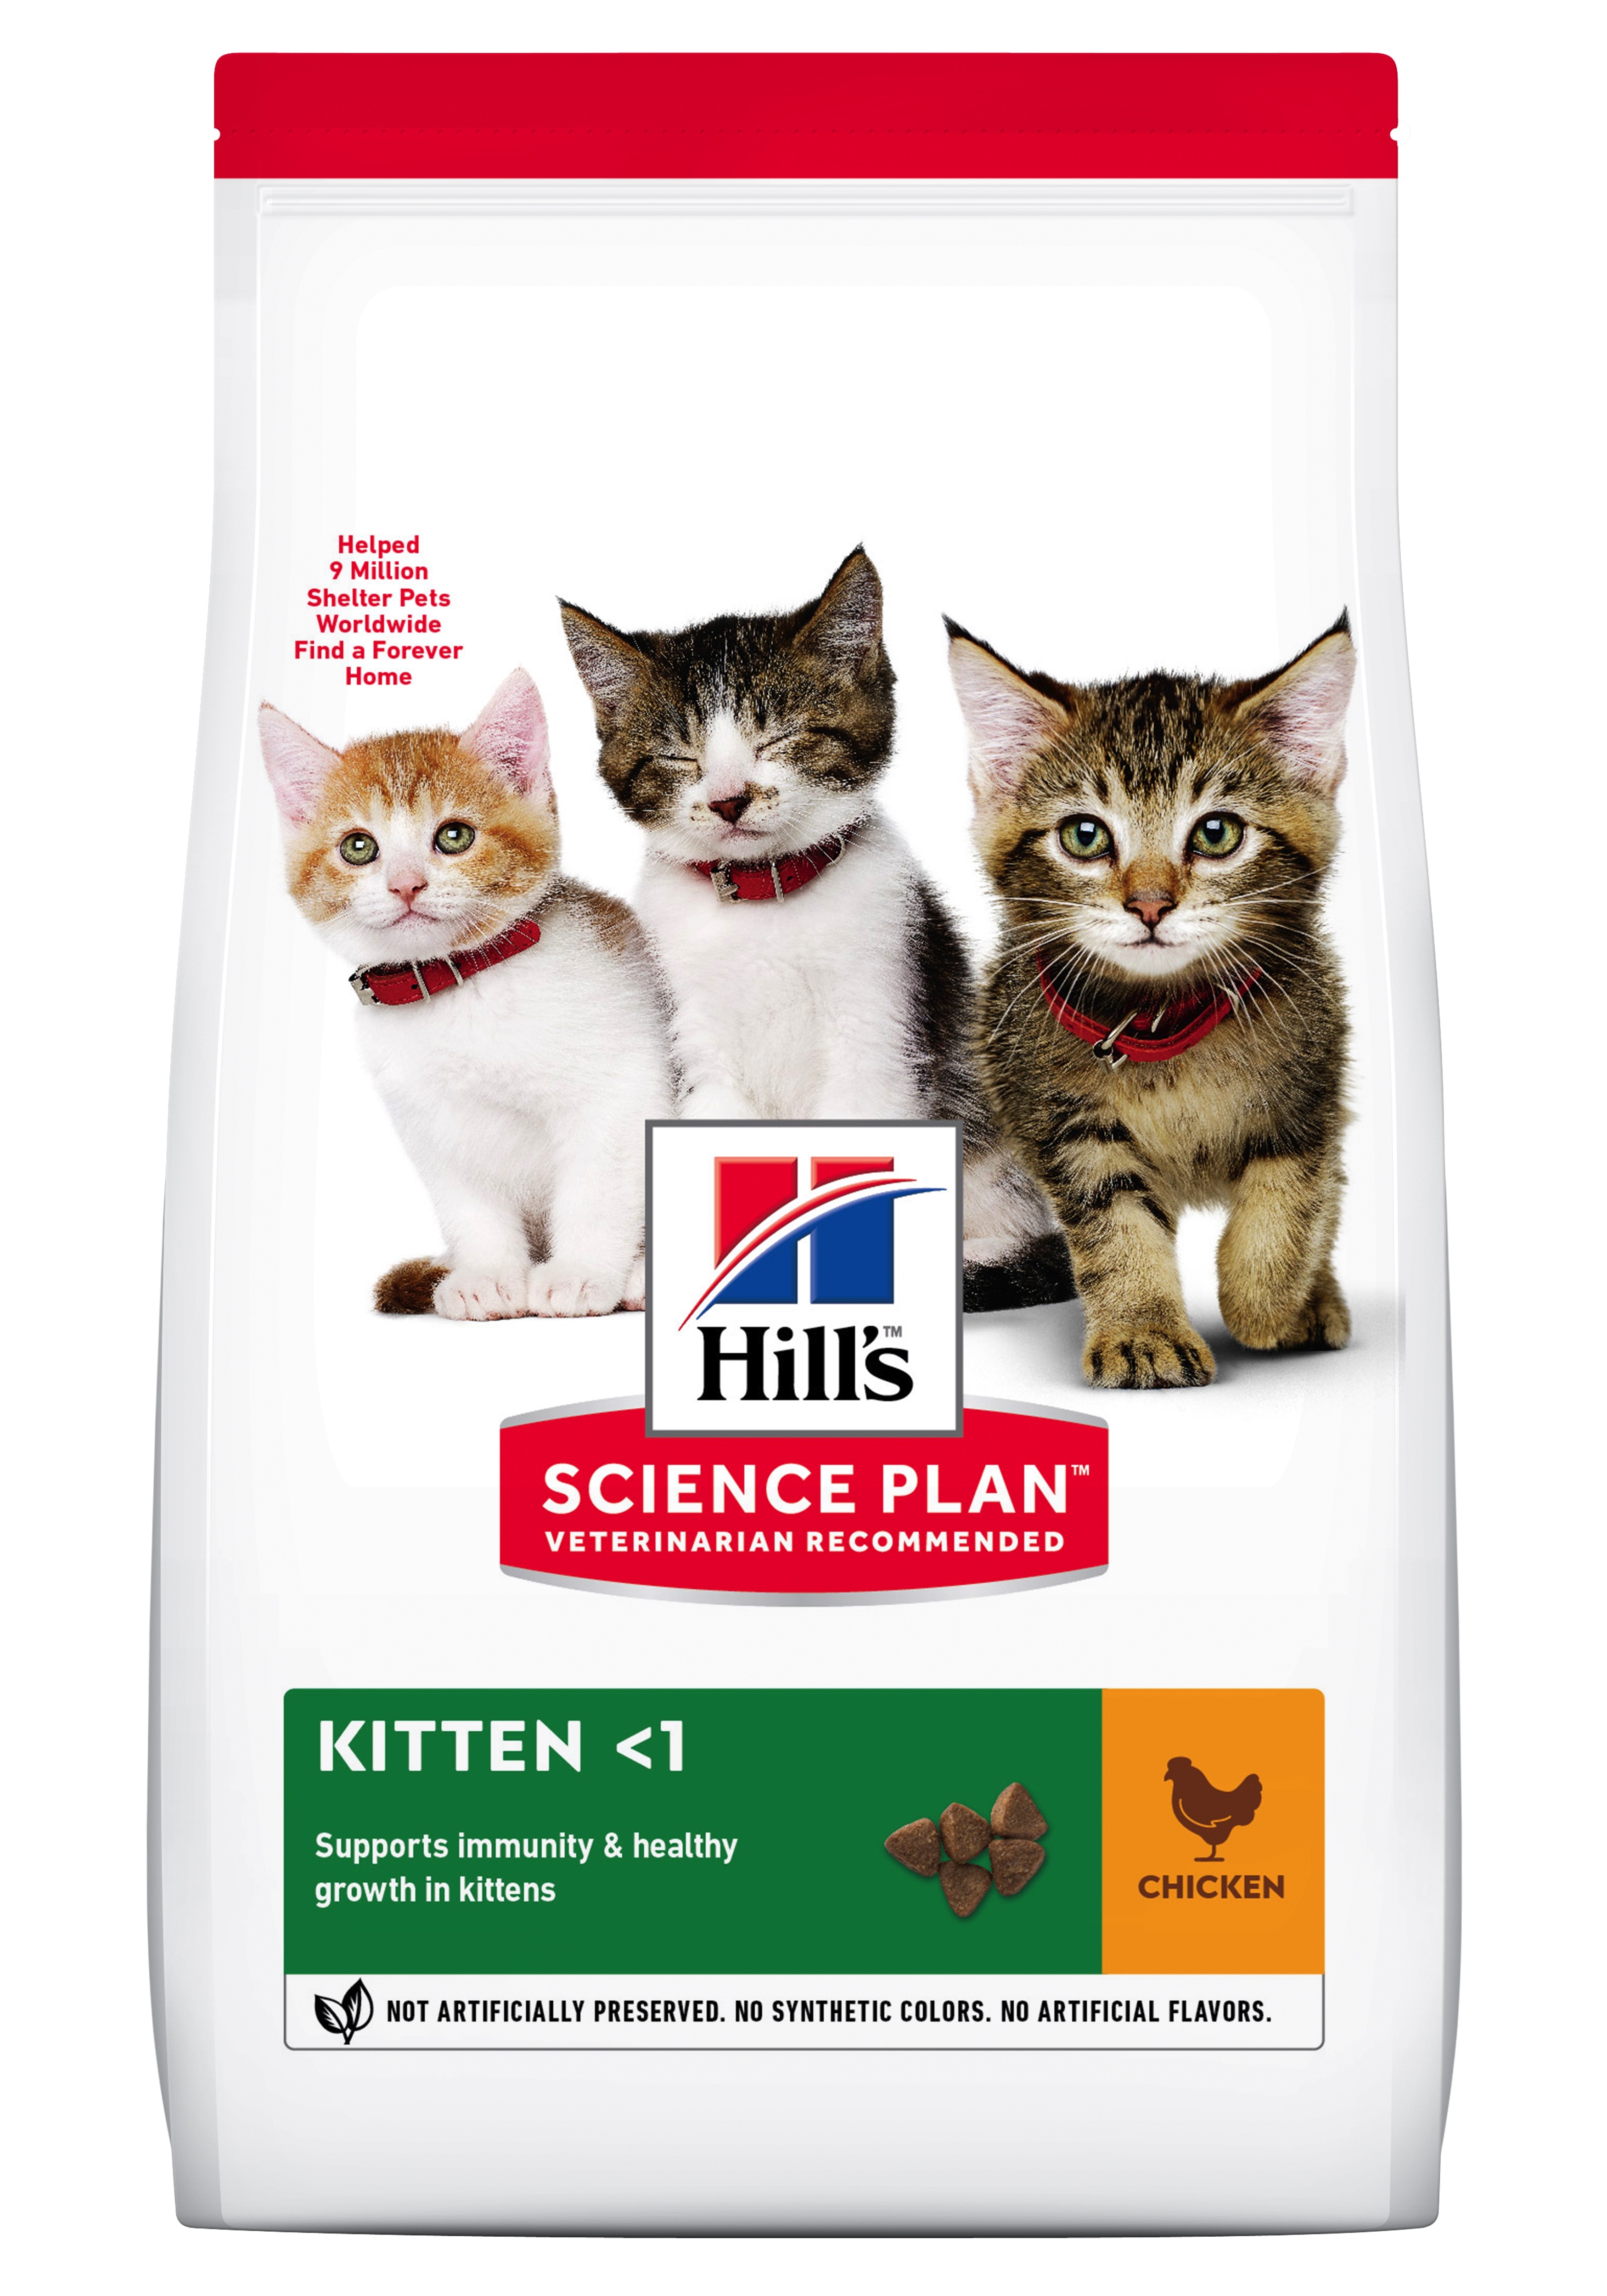 Hill's Science Plan™ Kitten Healthy Development™ Chicken.